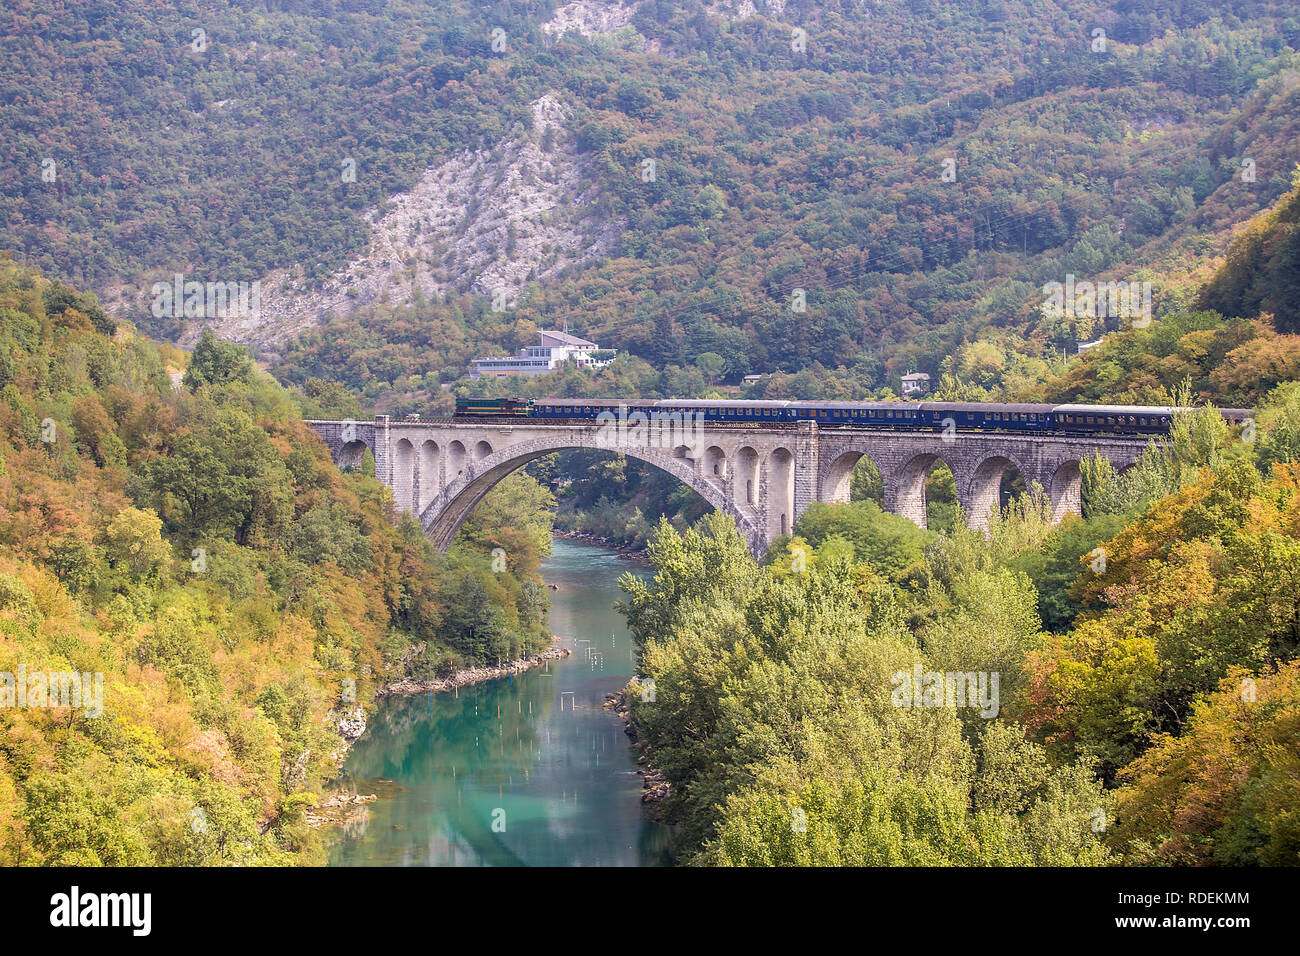 Slovenia train bridge hi-res stock photography and images - Alamy